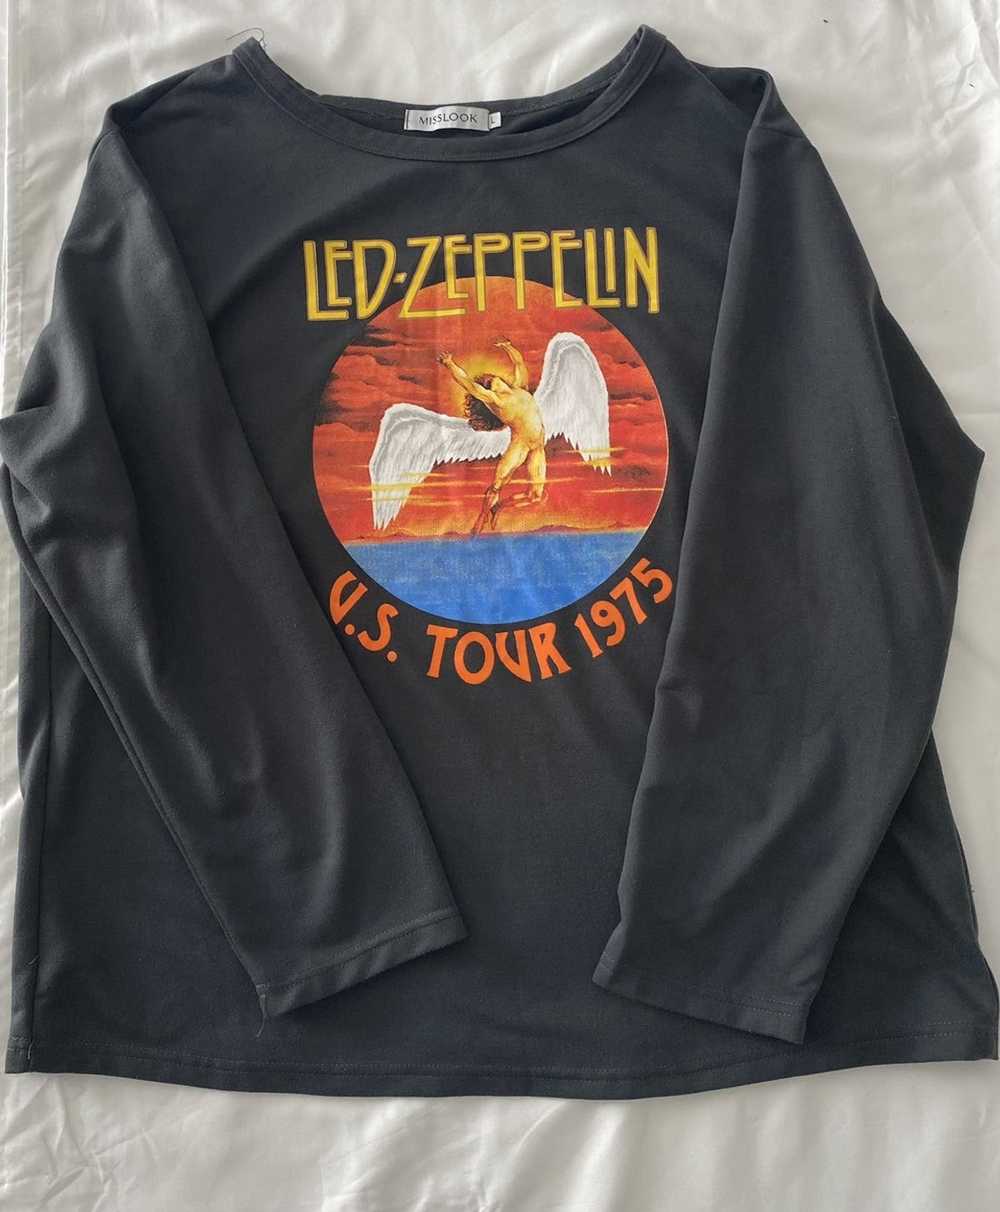 Vintage Led Zeppelin US Tour 1975 Shirt - image 1